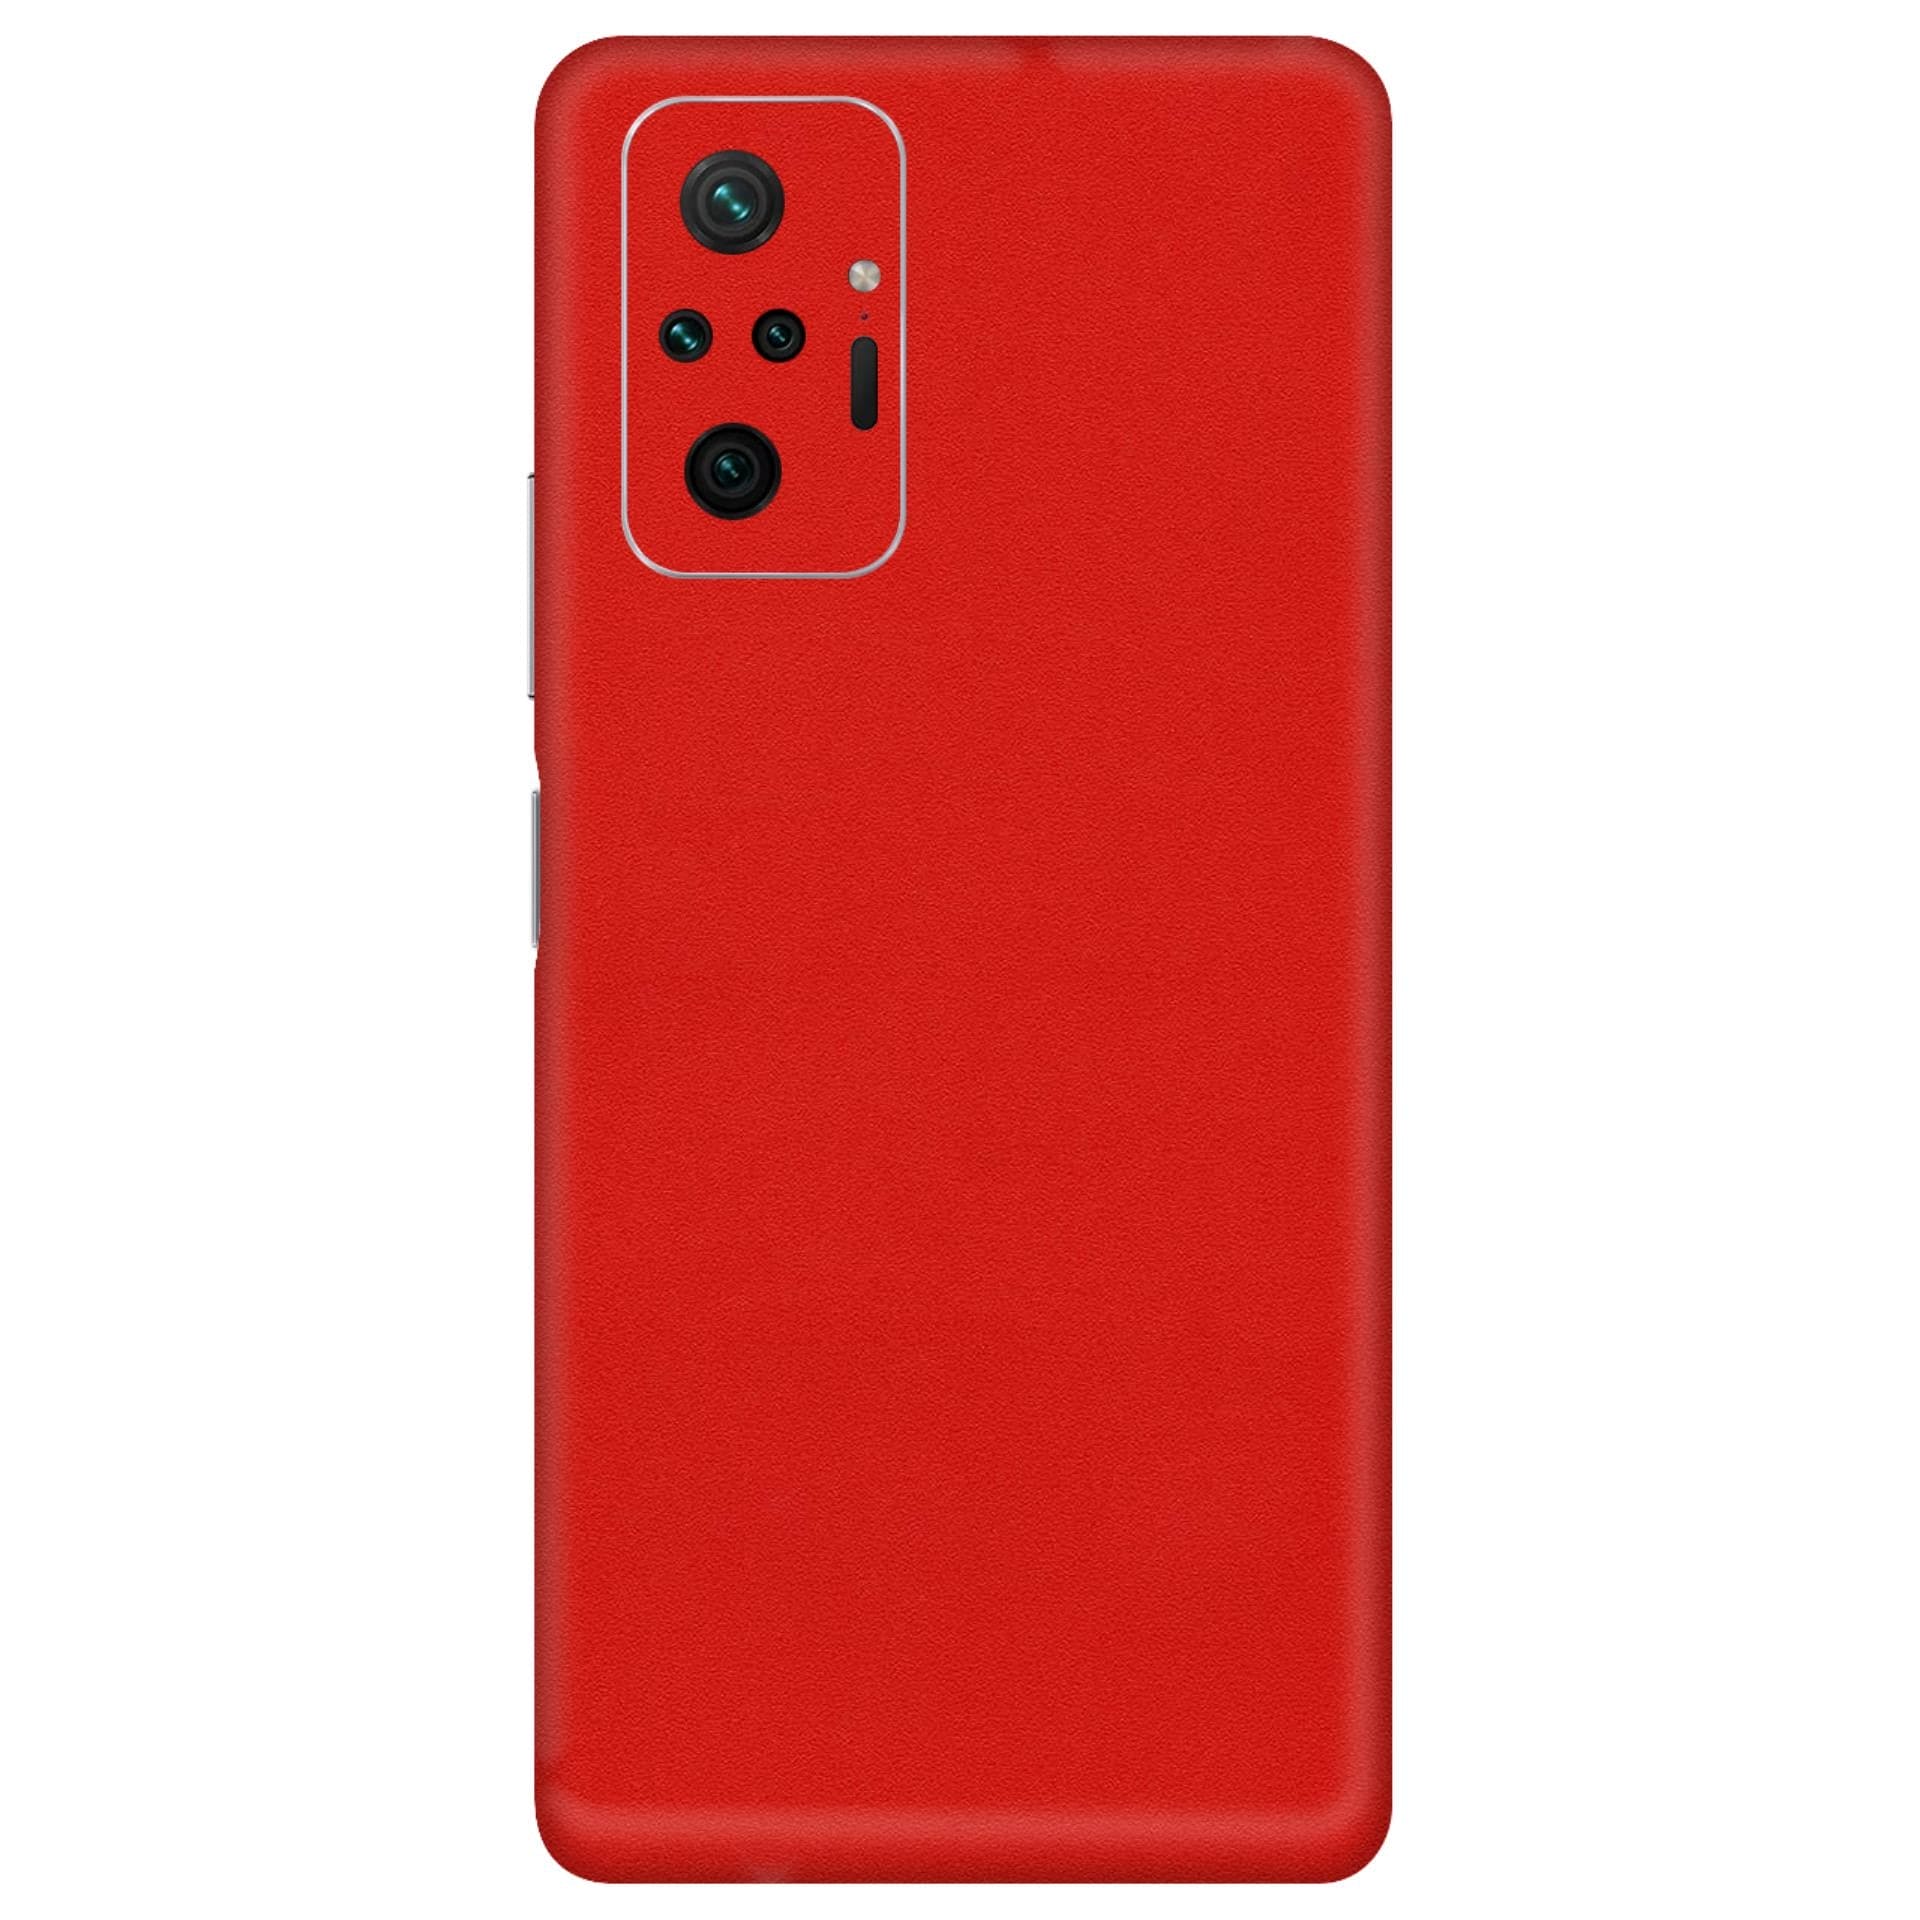 Redmi Note 10 Pro Matte Red skins